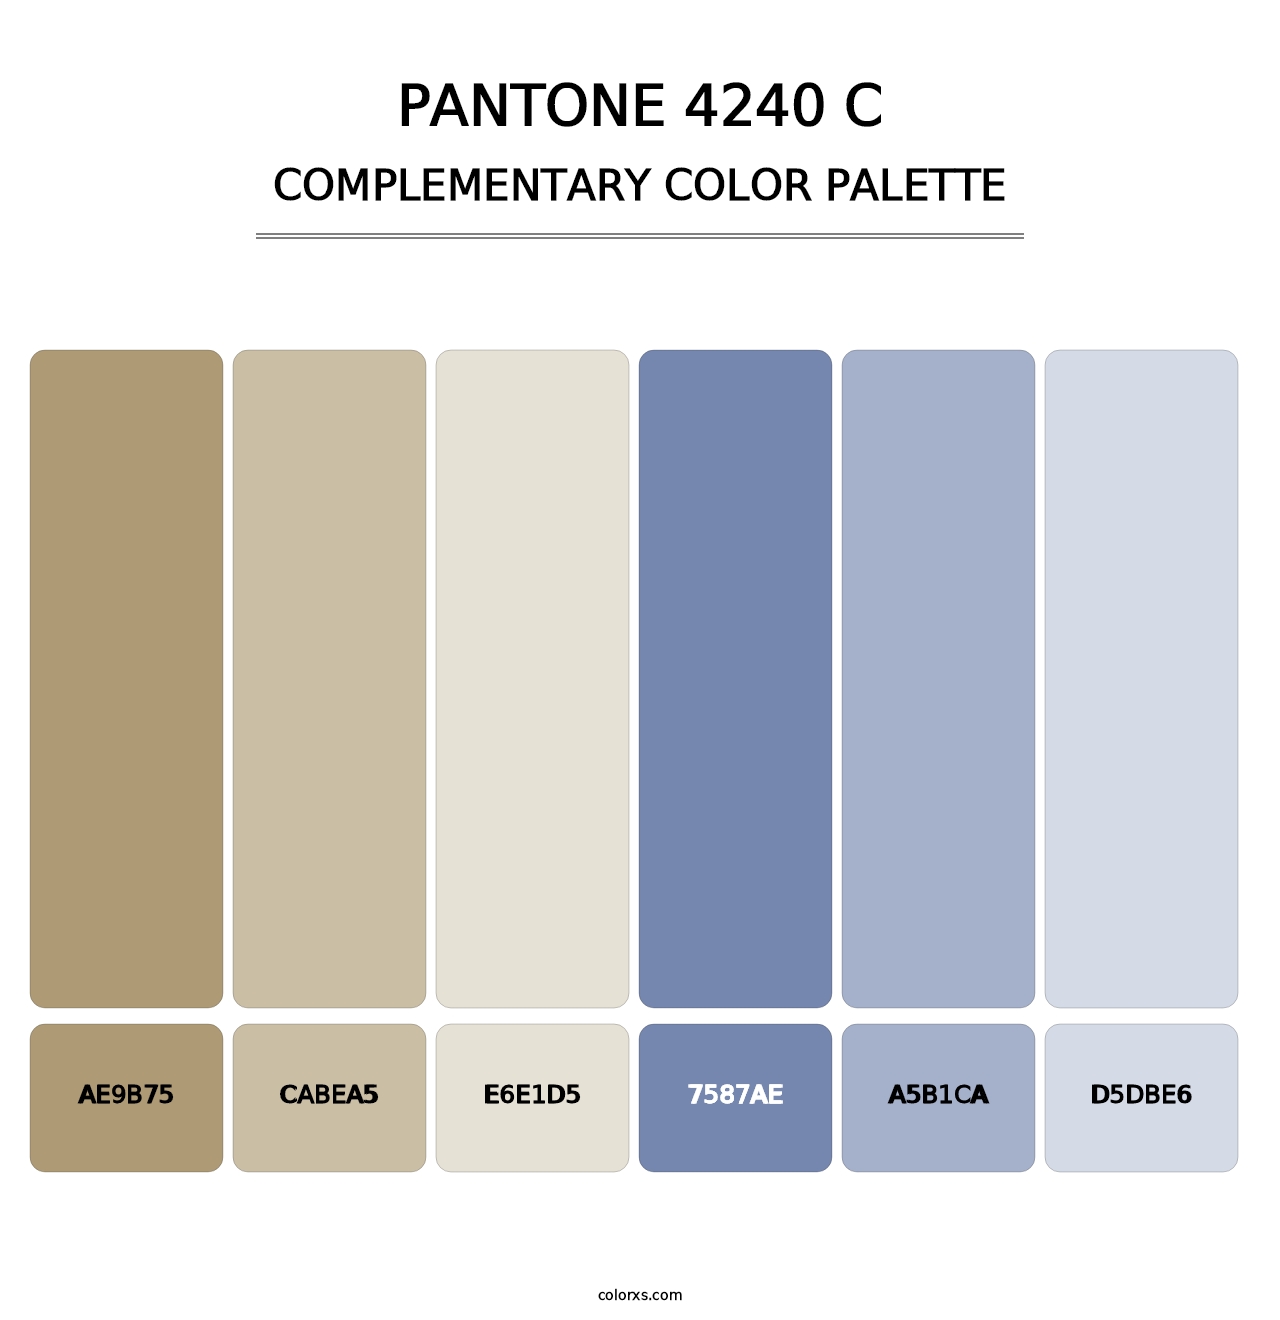 PANTONE 4240 C - Complementary Color Palette